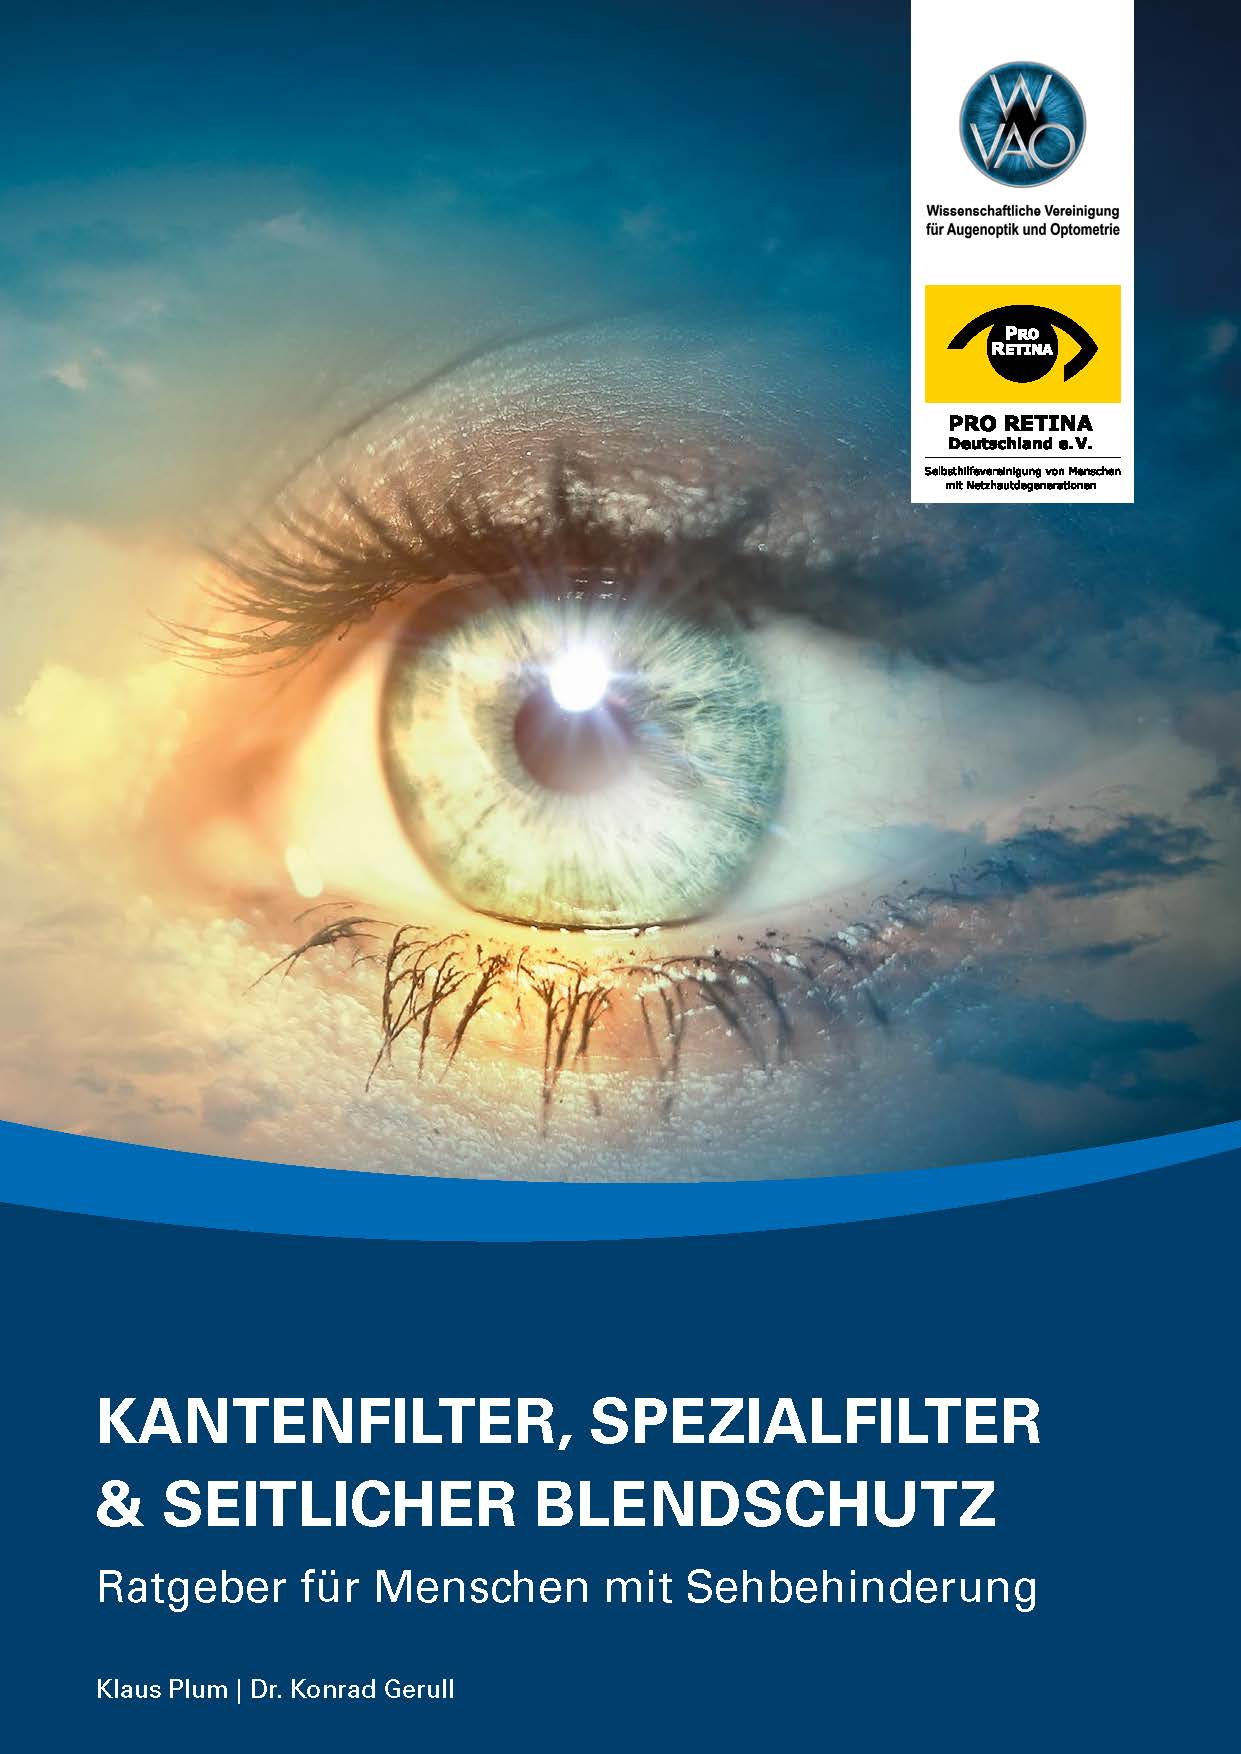 Cover Kantenfilter Neuauflage 2019.jpg (145 KB)